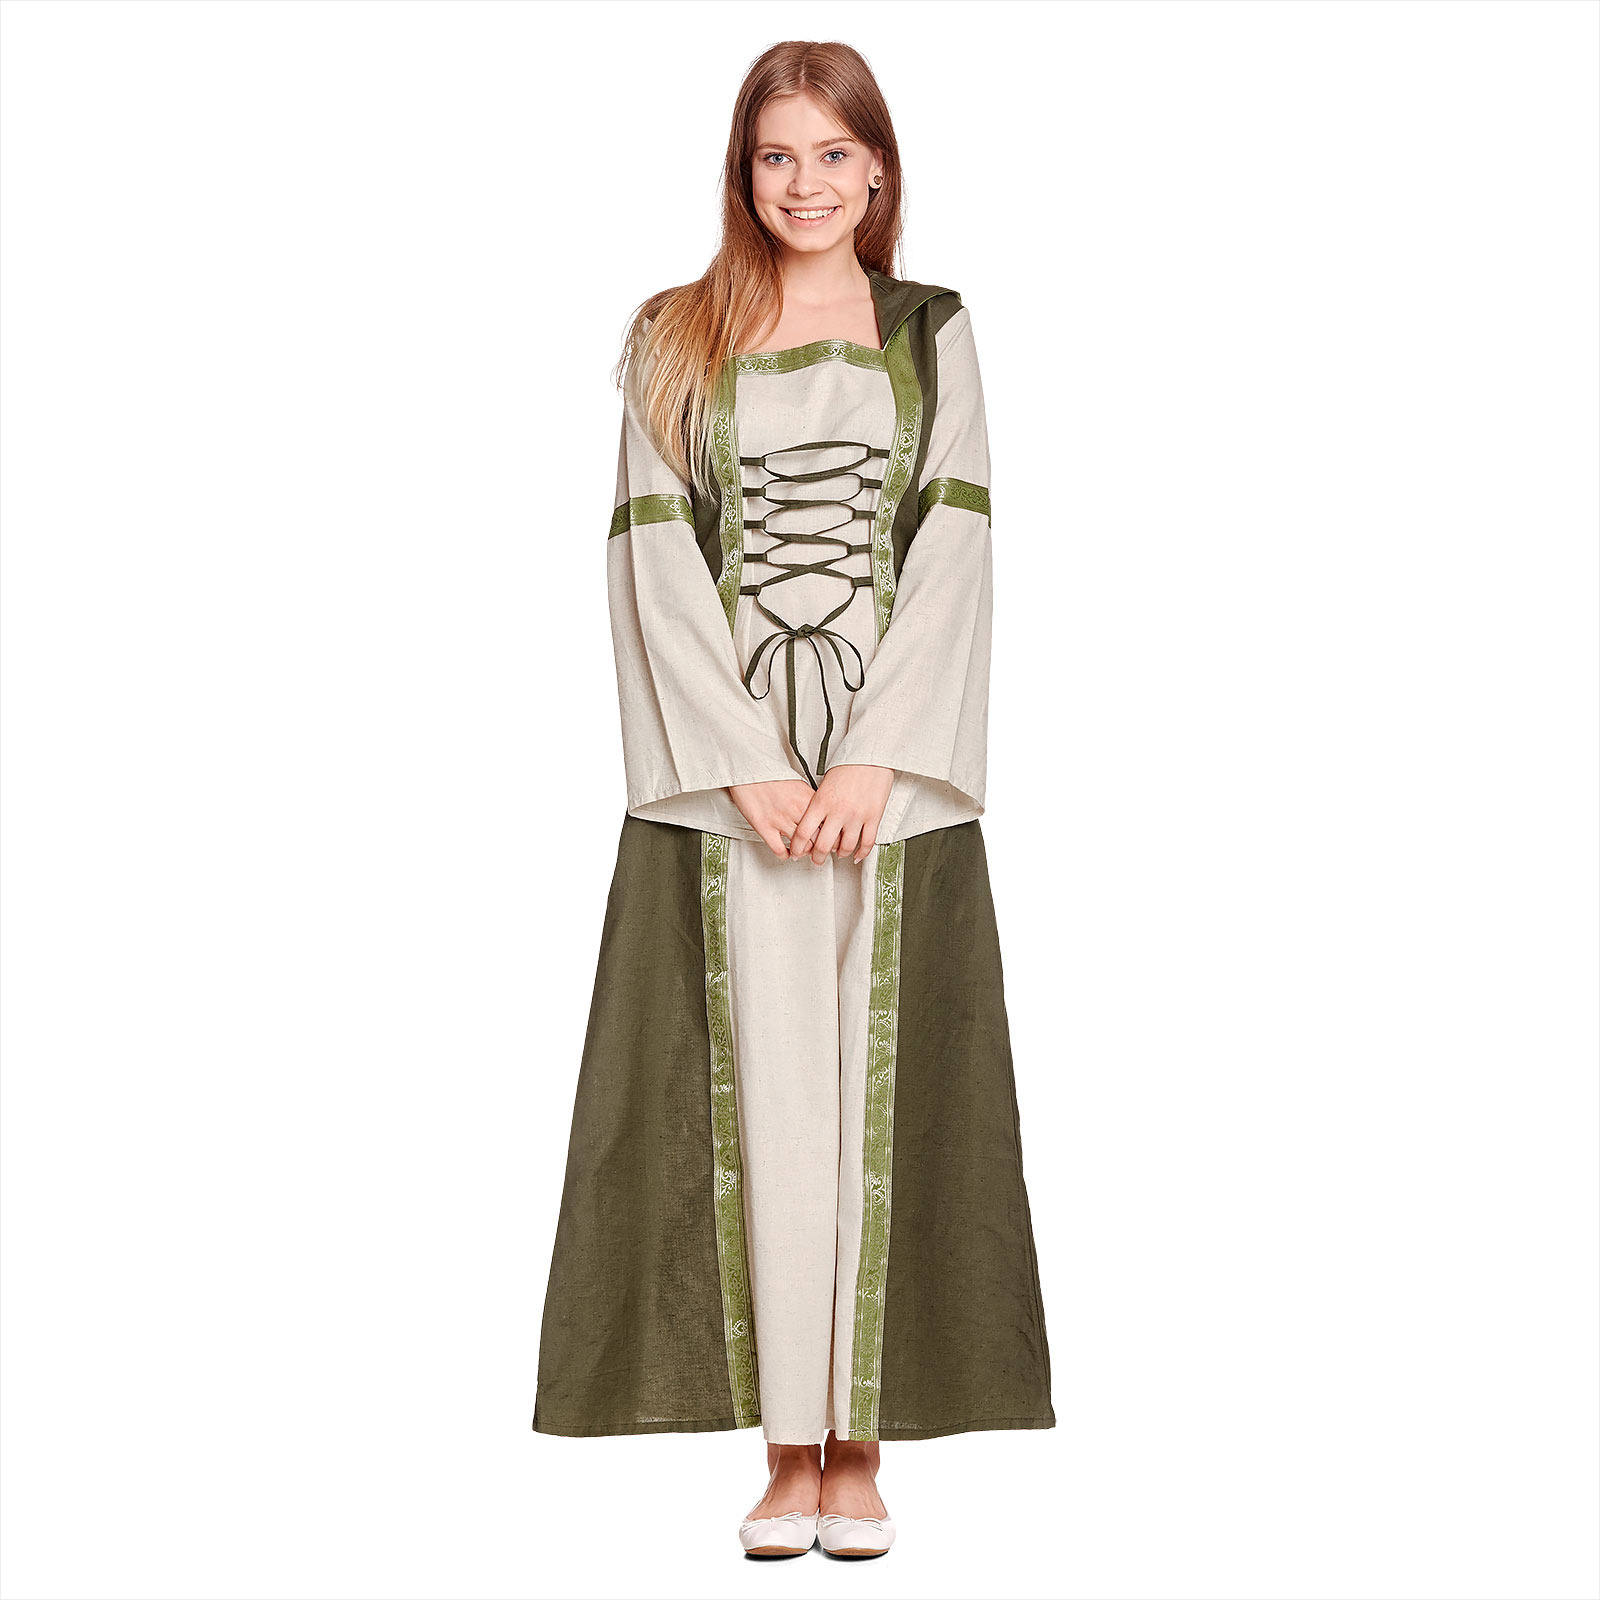 Rebecca Mittelalter Kleid natur-grün